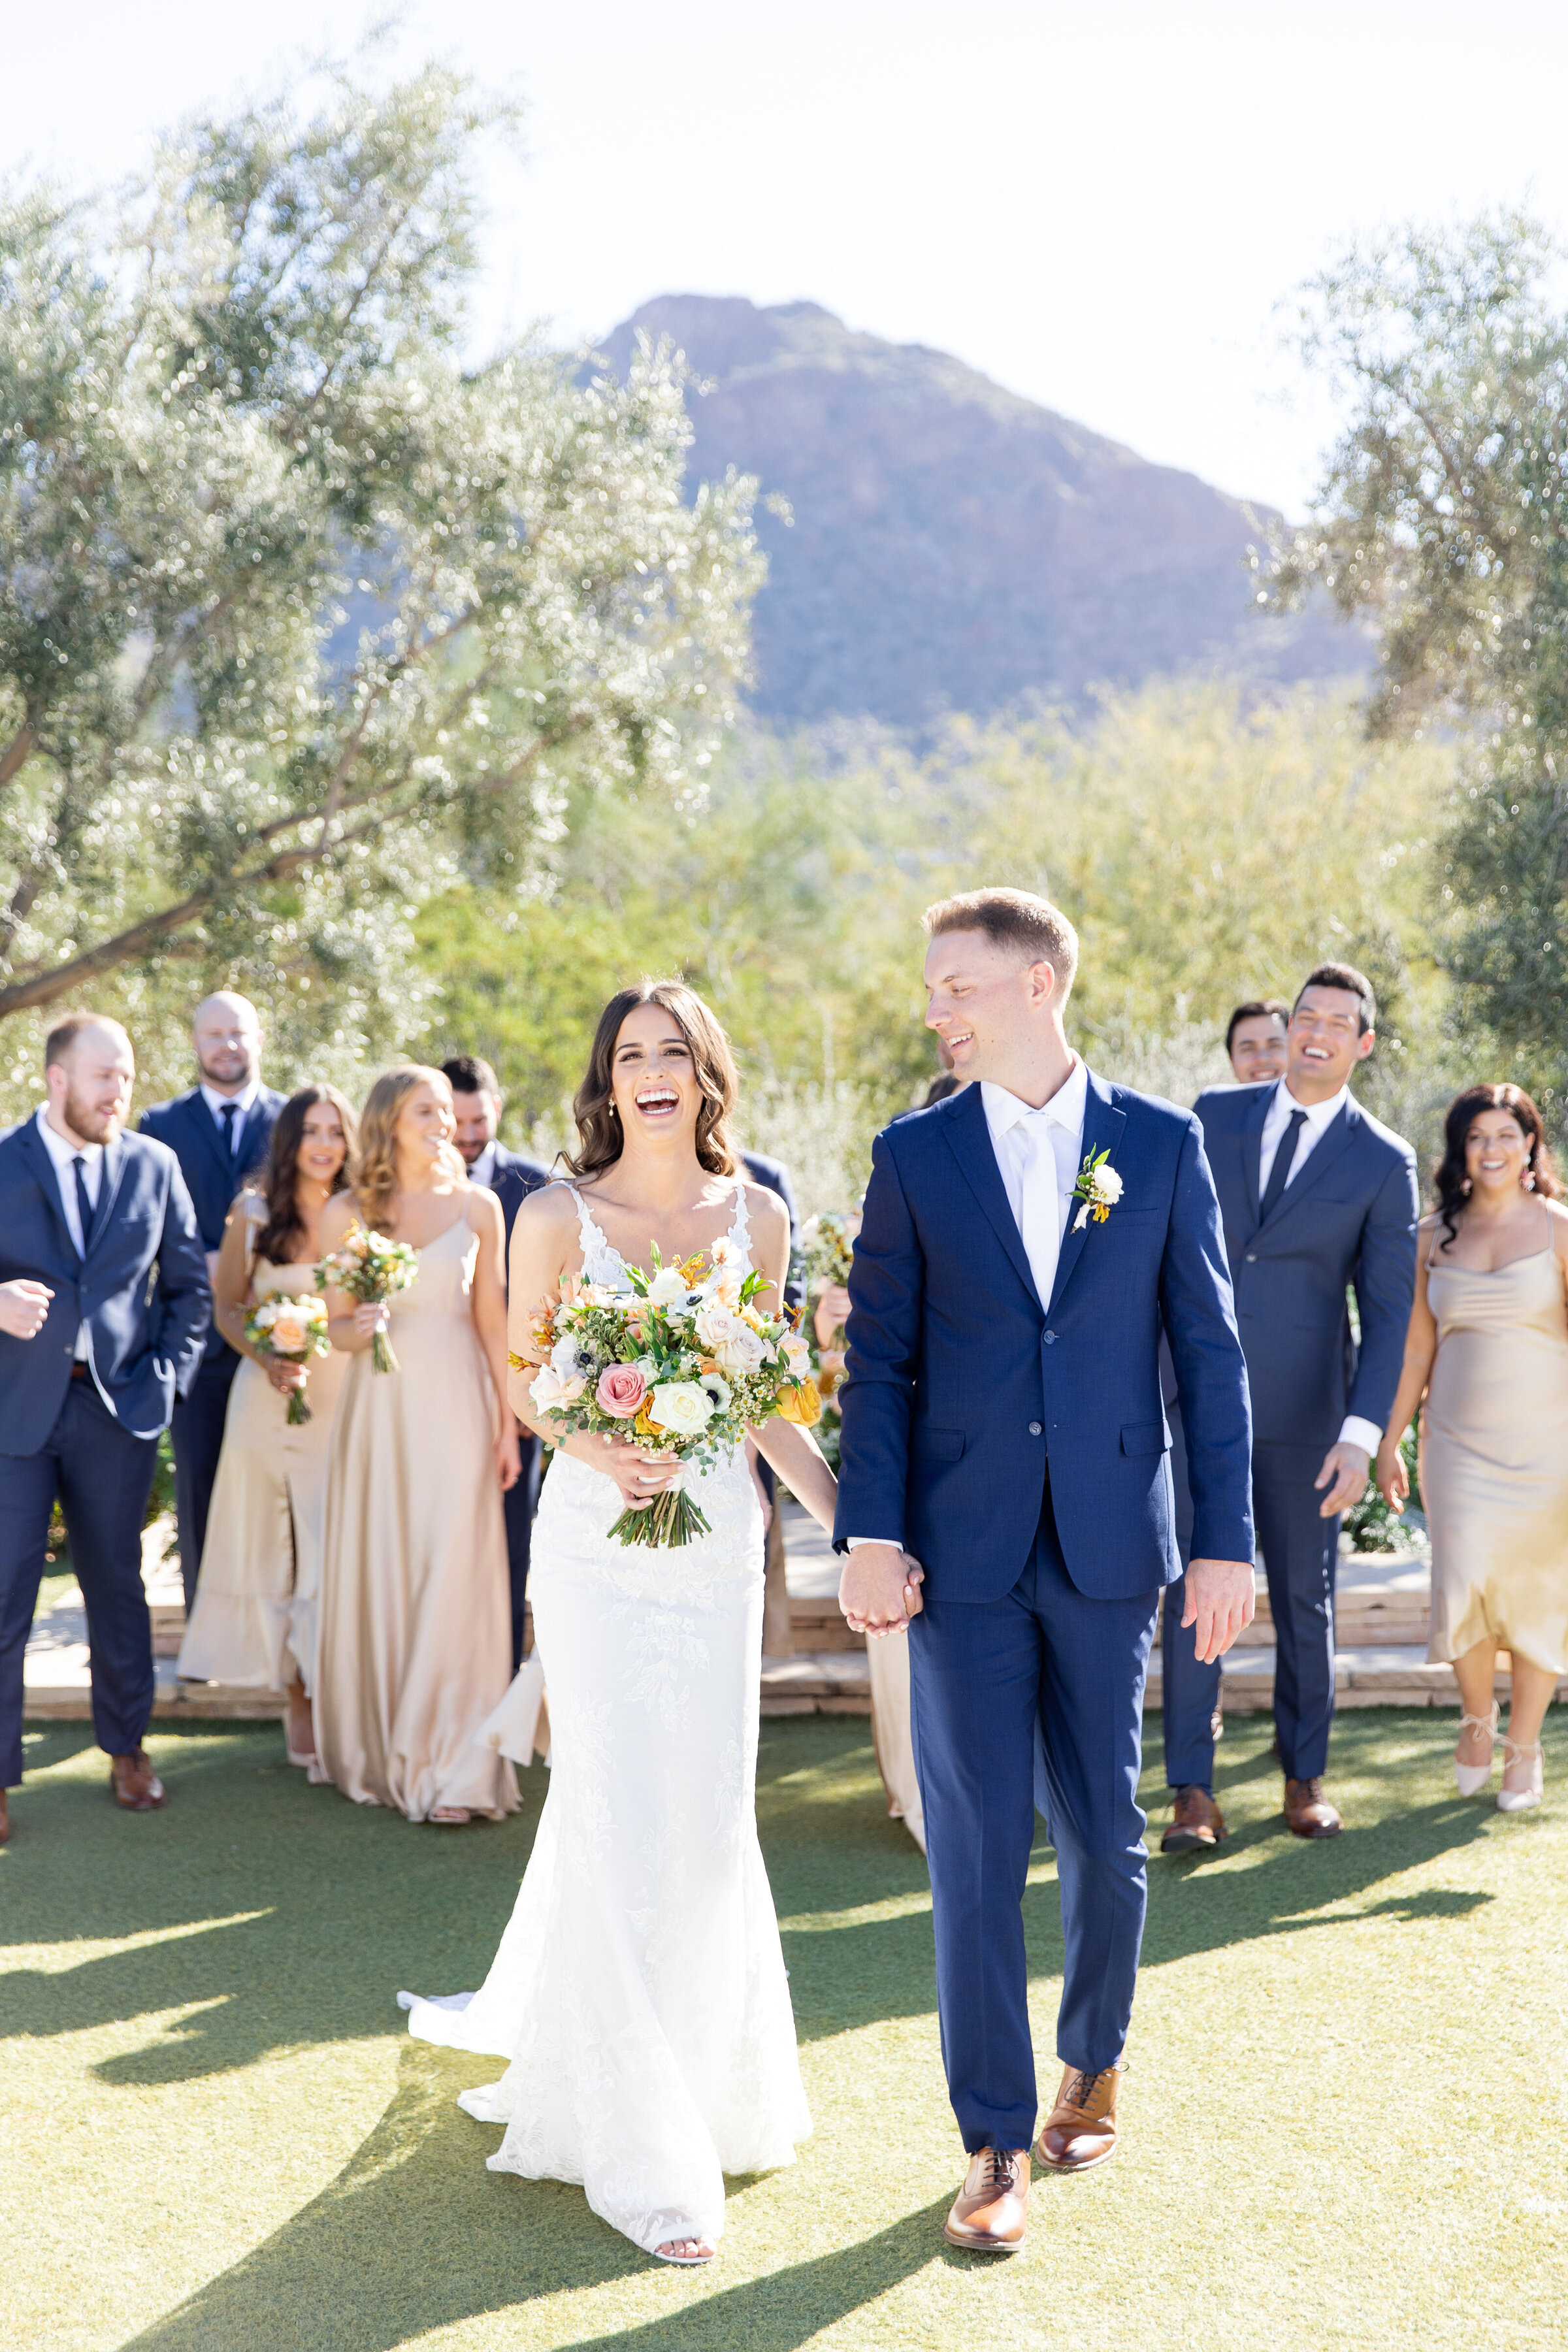 Karlie Colleen Photography - Kelcie & Ross - El Chorro Wedding - Arizona - Some like it classic -350